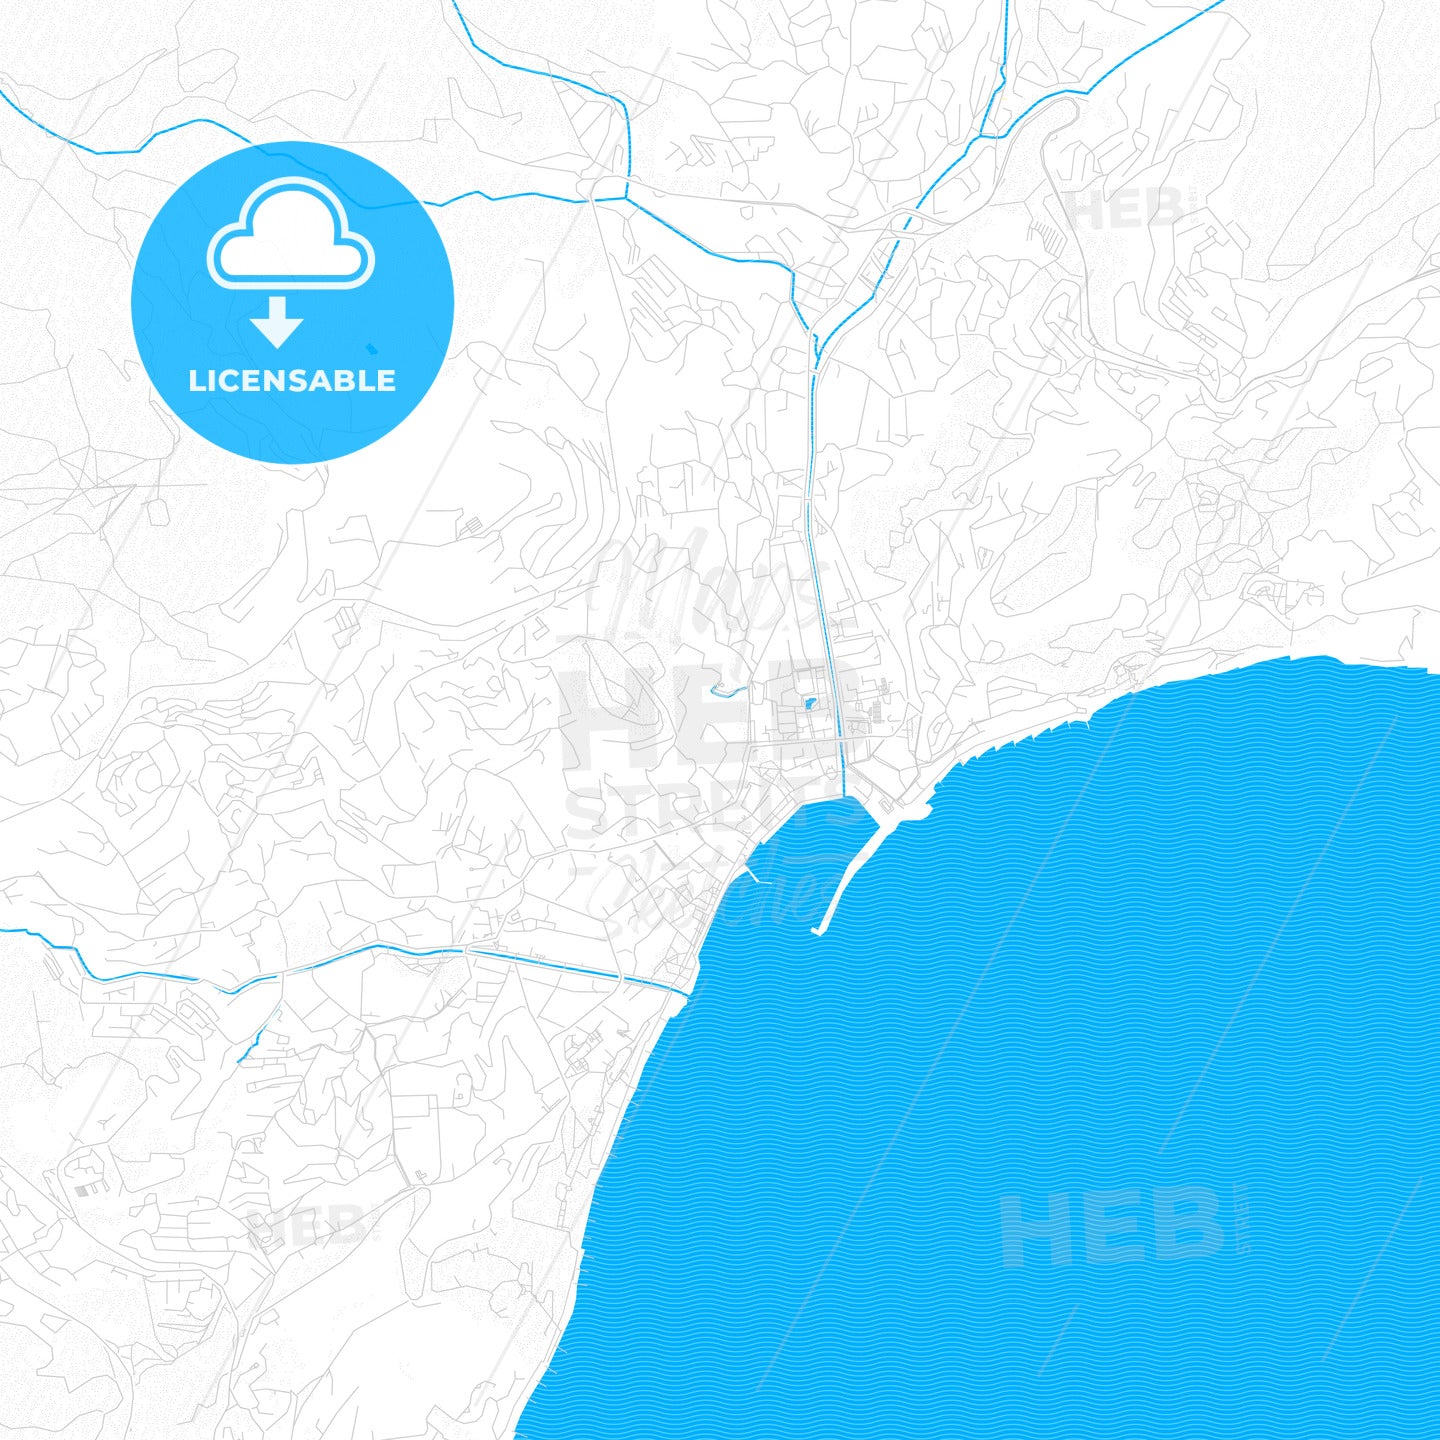 Yalta, Ukraine PDF vector map with water in focus